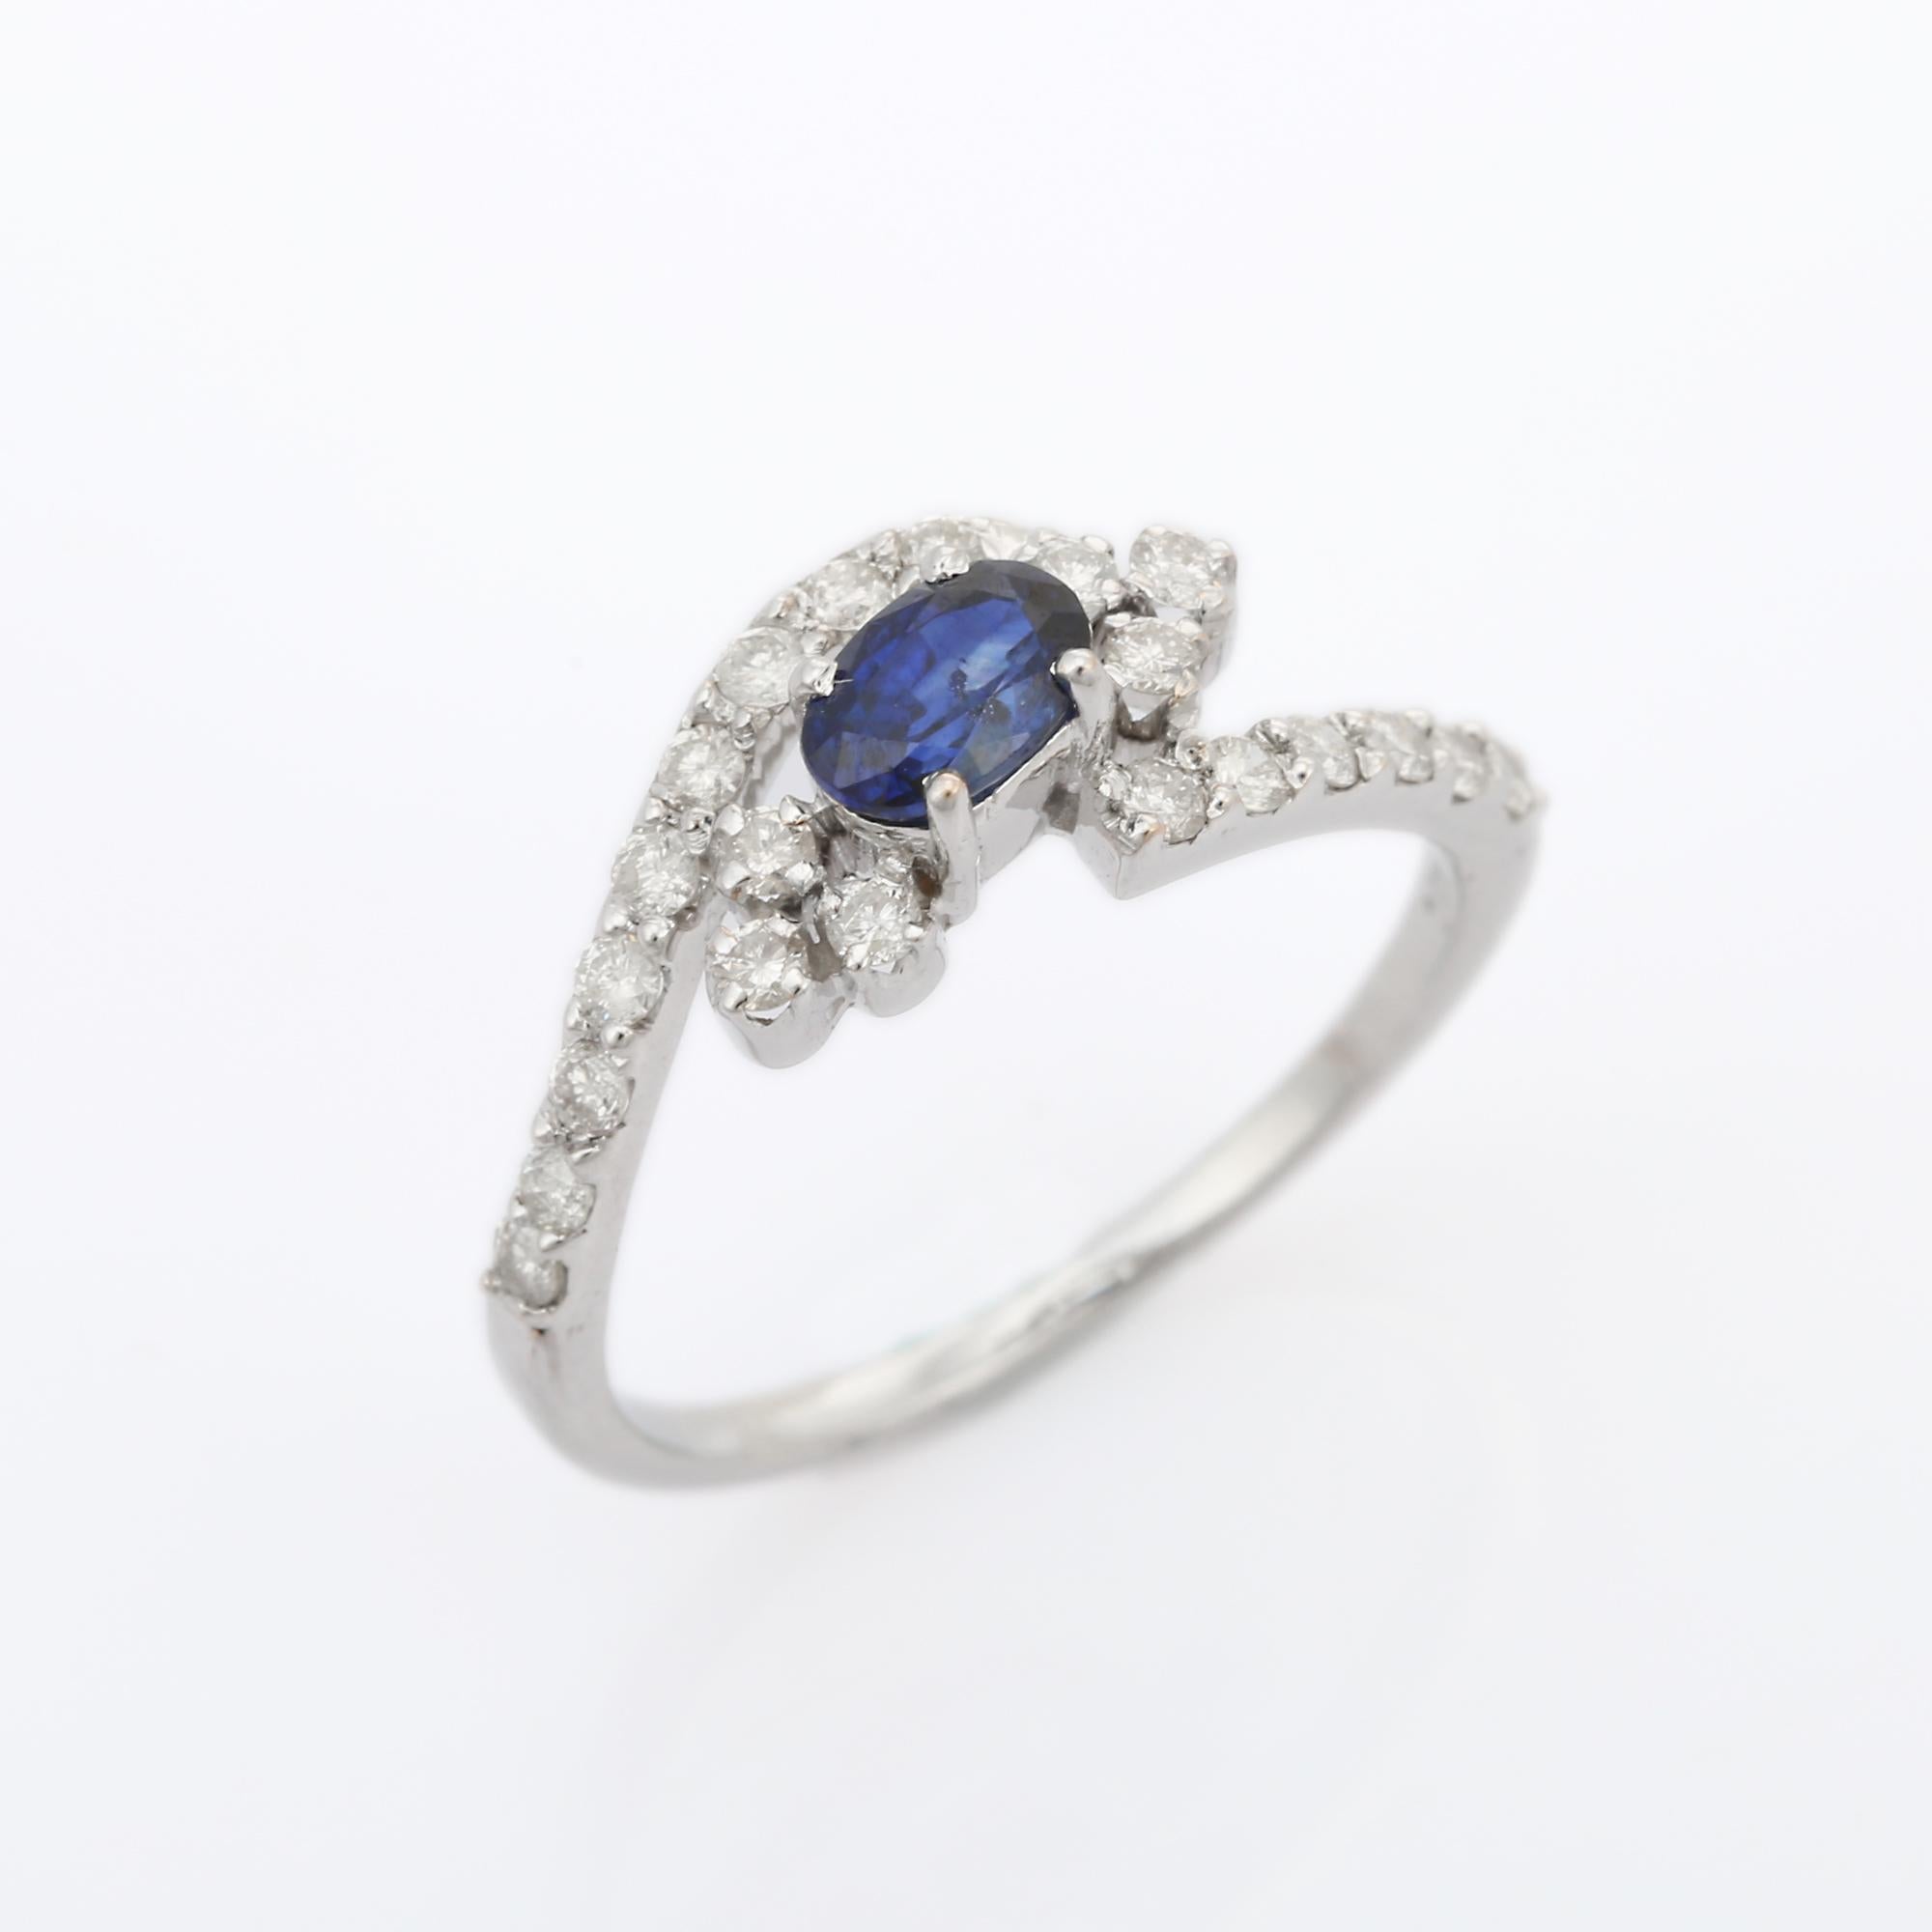 For Sale:  Art Nouveau Style Women Diamond Blue Sapphire Wedding Ring in 14K White Gold 5